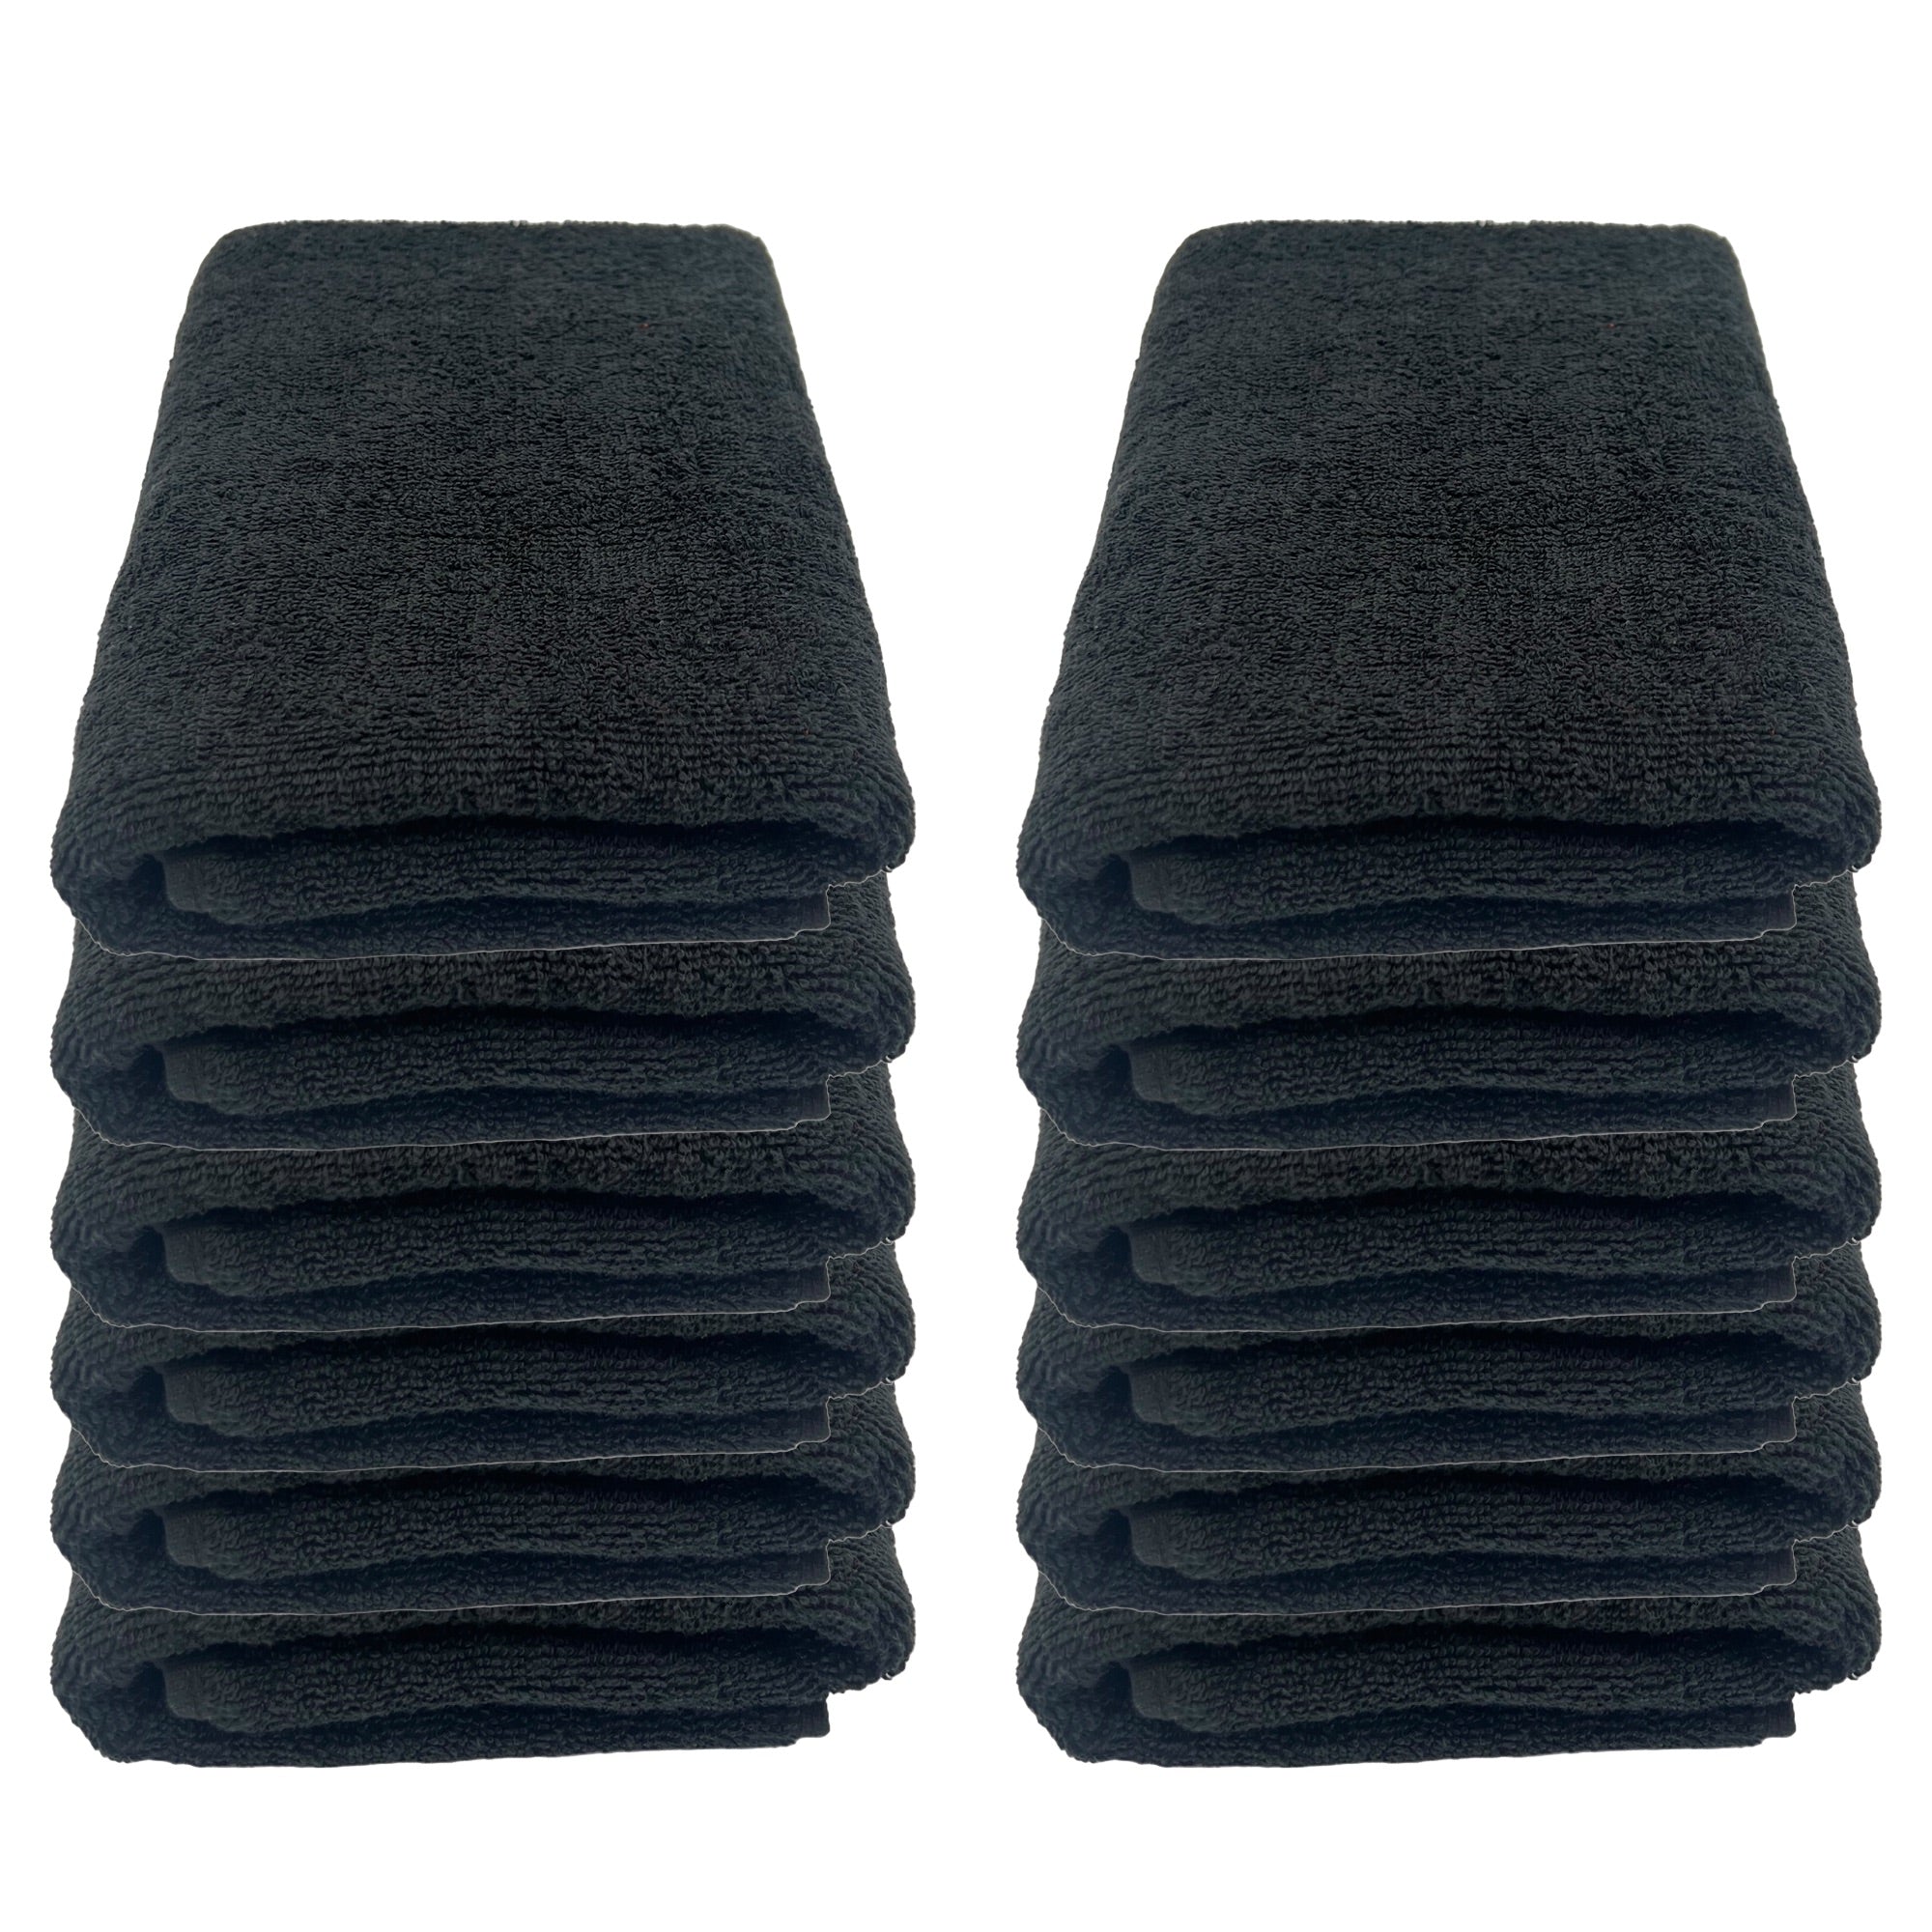 Gabri - Barber Hair Towel Black 100% Cotton 85x50cm (12pcs)